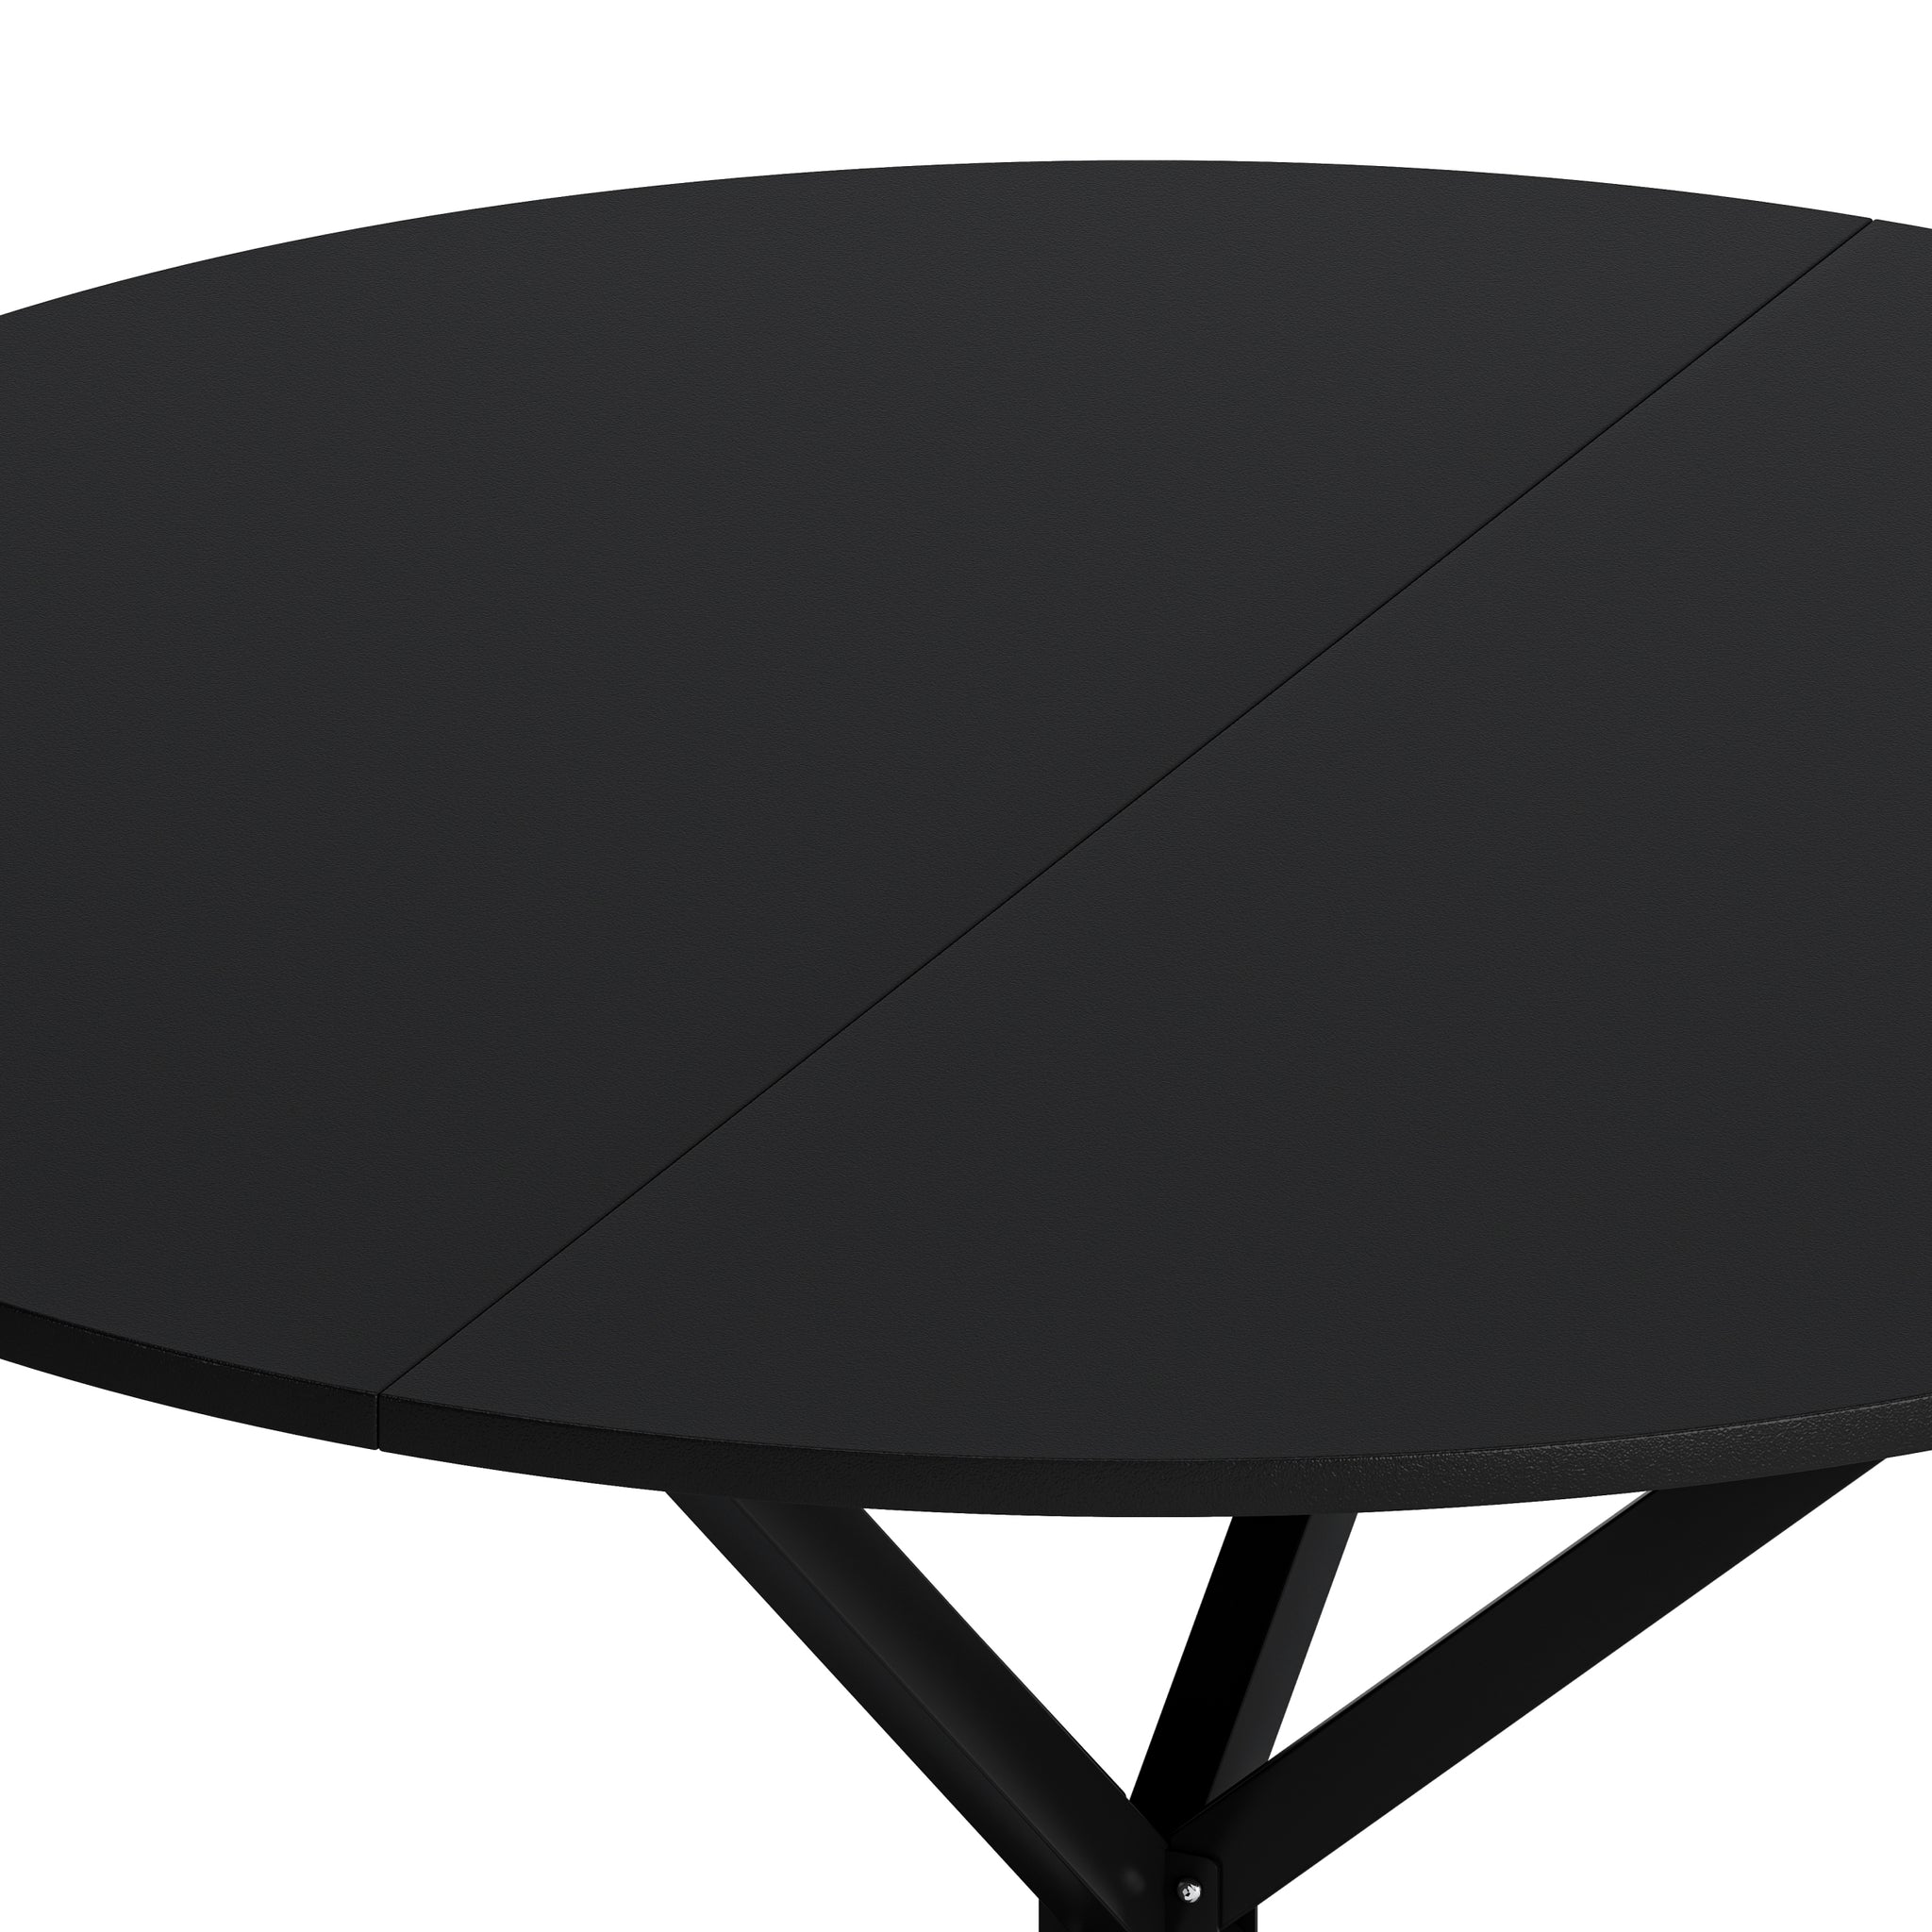 42.13'' Modern Cross Leg Round Dining Table, Black Top black-mdf+metal